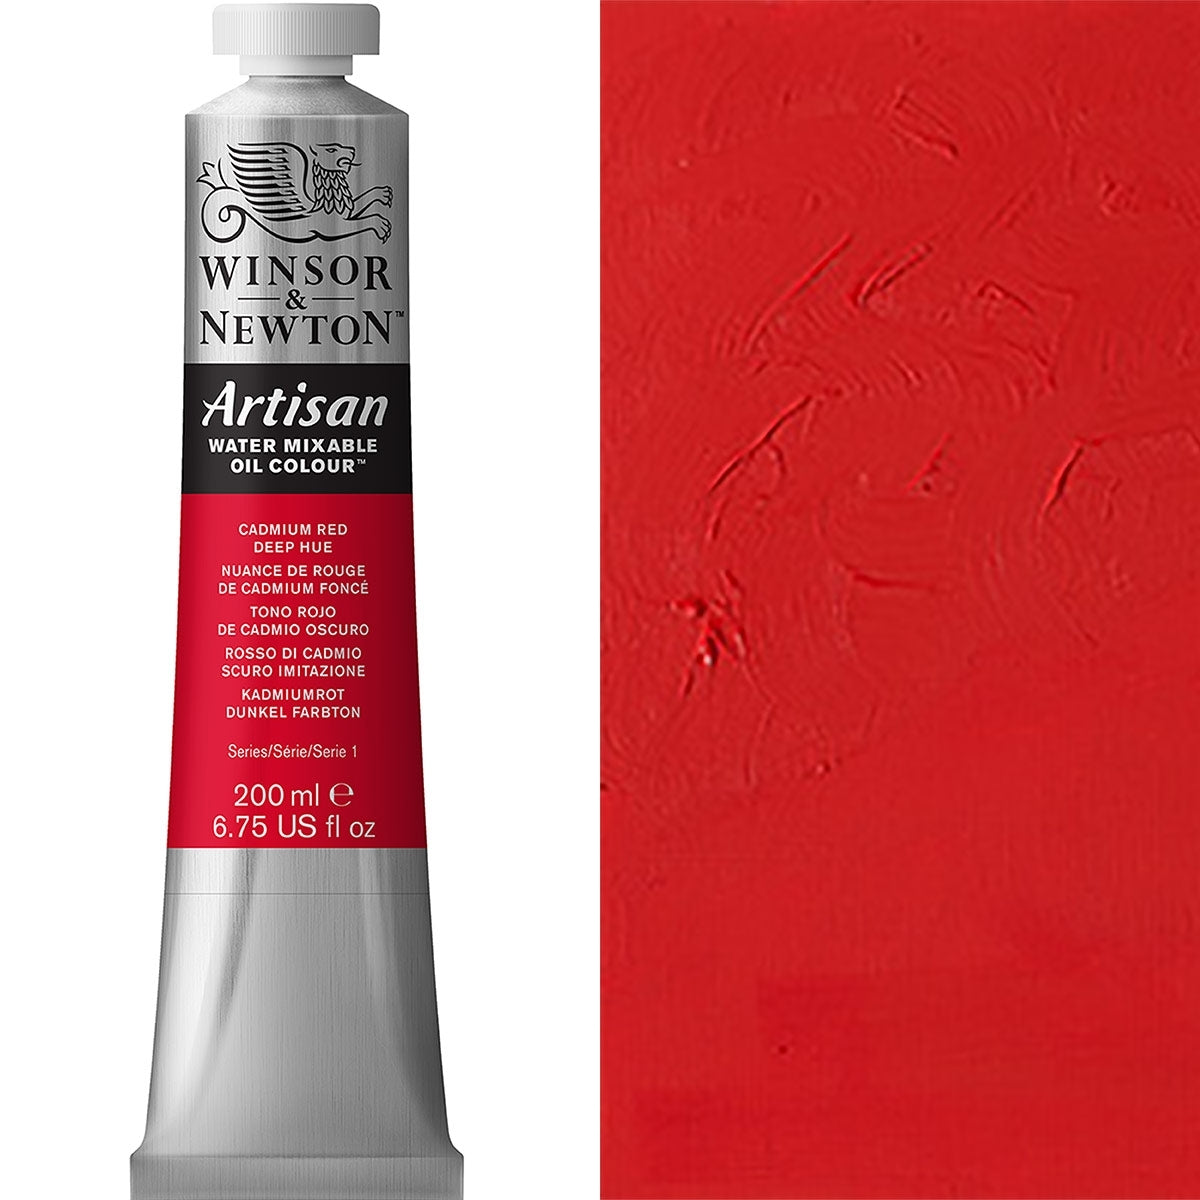 Winsor en Newton - Artisan Oil Color Water Mixable - 200 ml - Cadmium Red Deep Hue